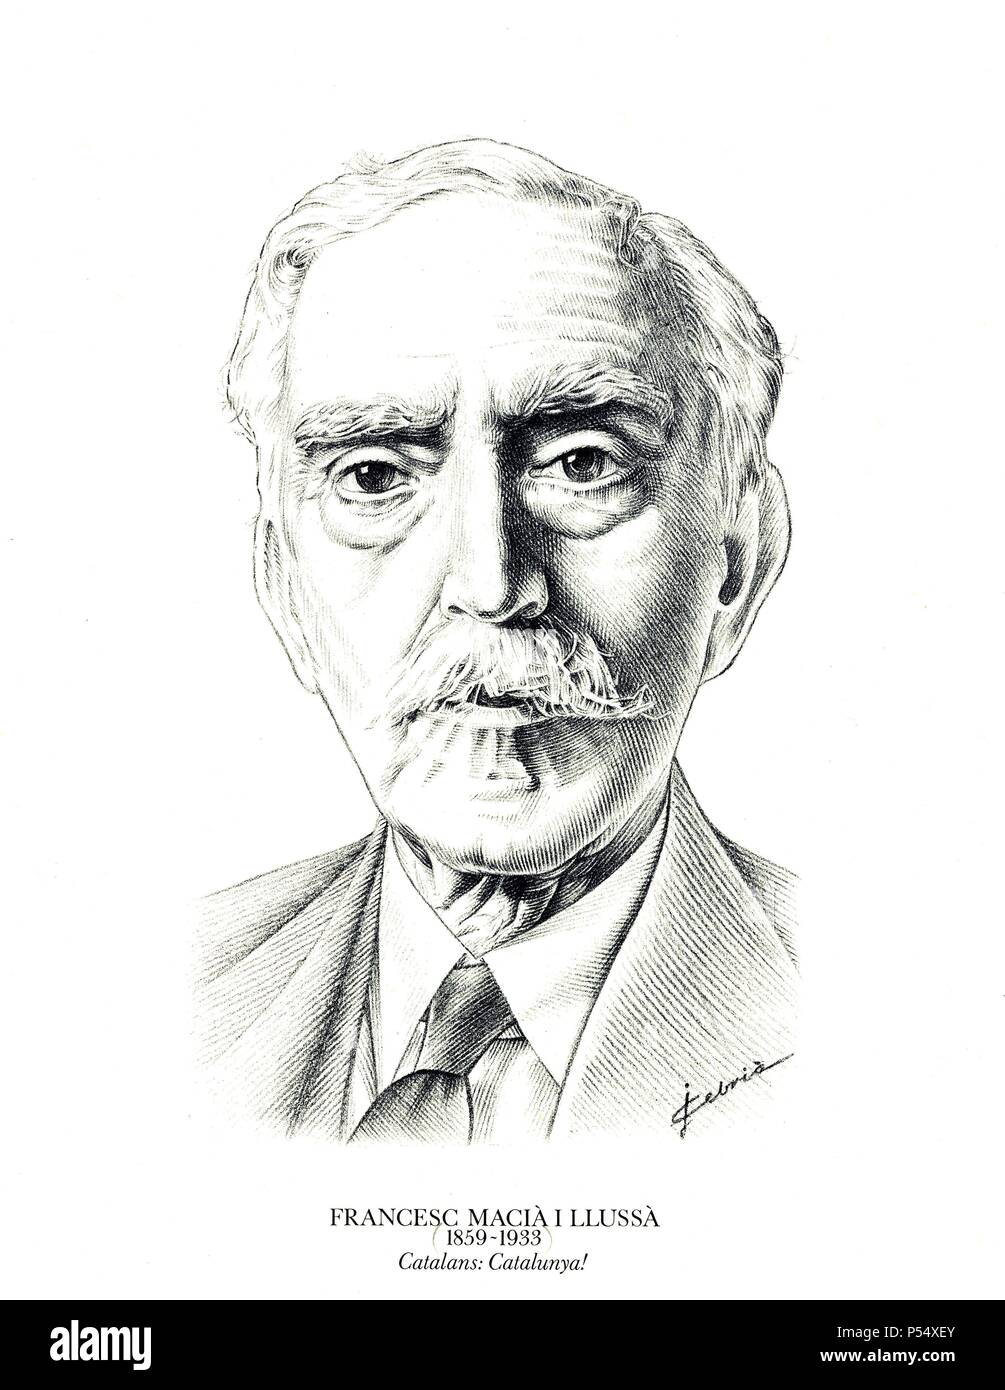 Francesc Macià i Llussà (1859-1933). Político catalán, presidente de la Generalitat. Dibujo de Josep Cebrià. Stock Photo